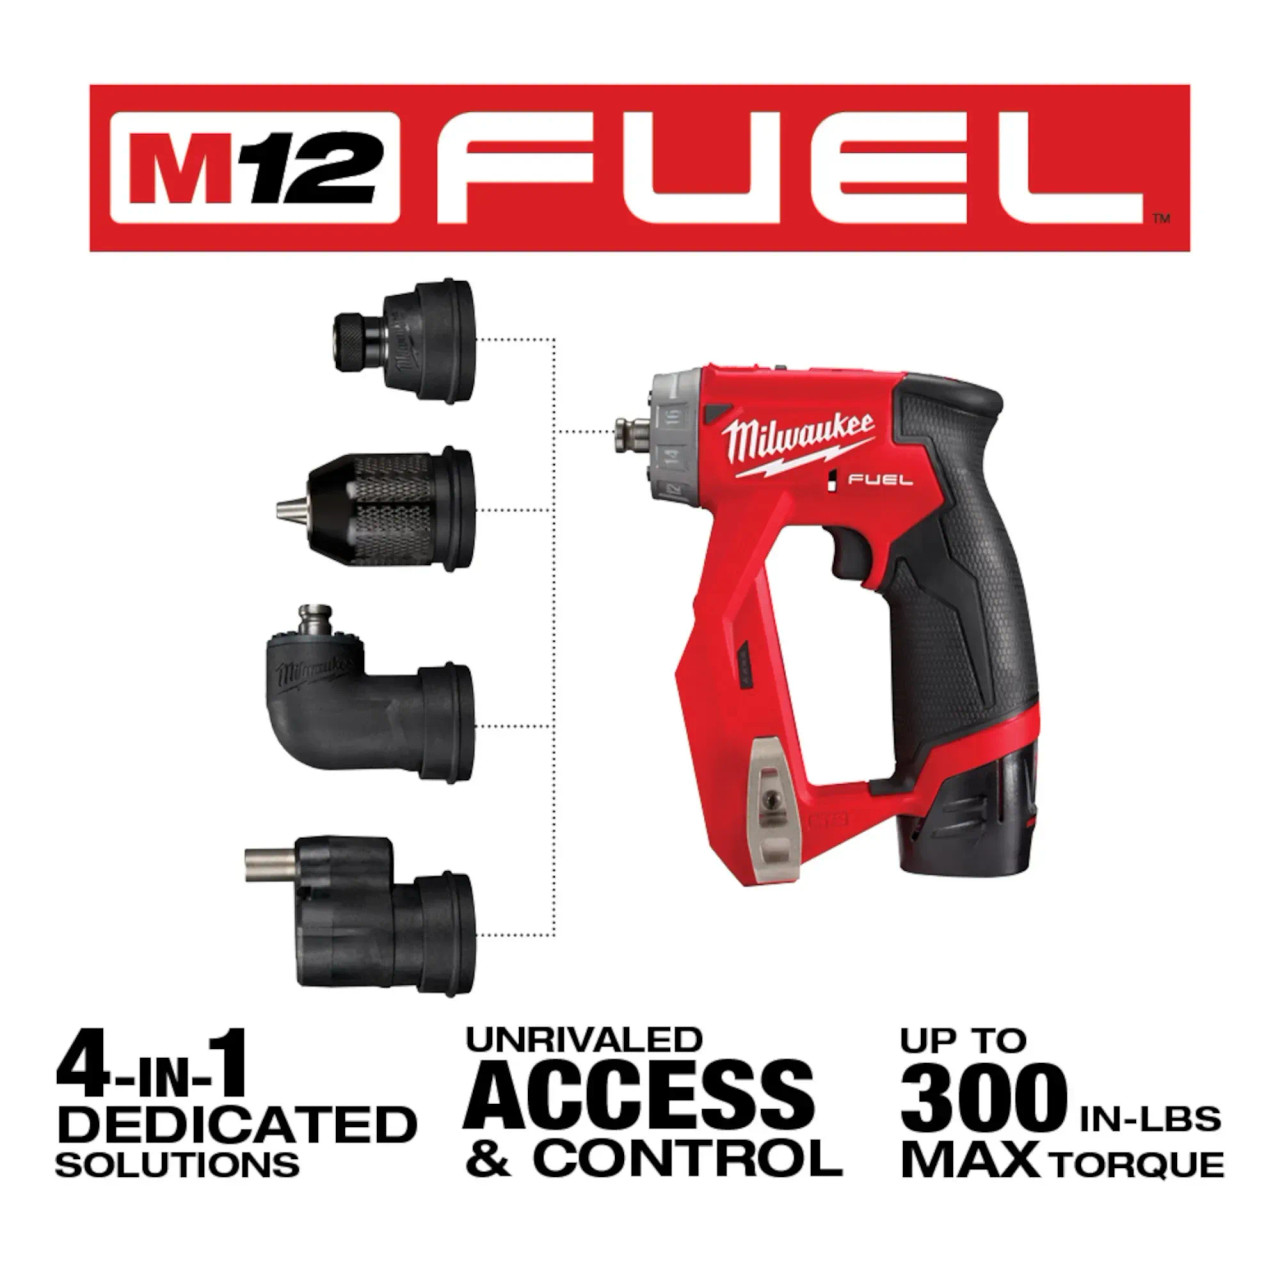 M12 FUEL™ Installation Drill/Driver Kit / Free XC5.0 Battery m12